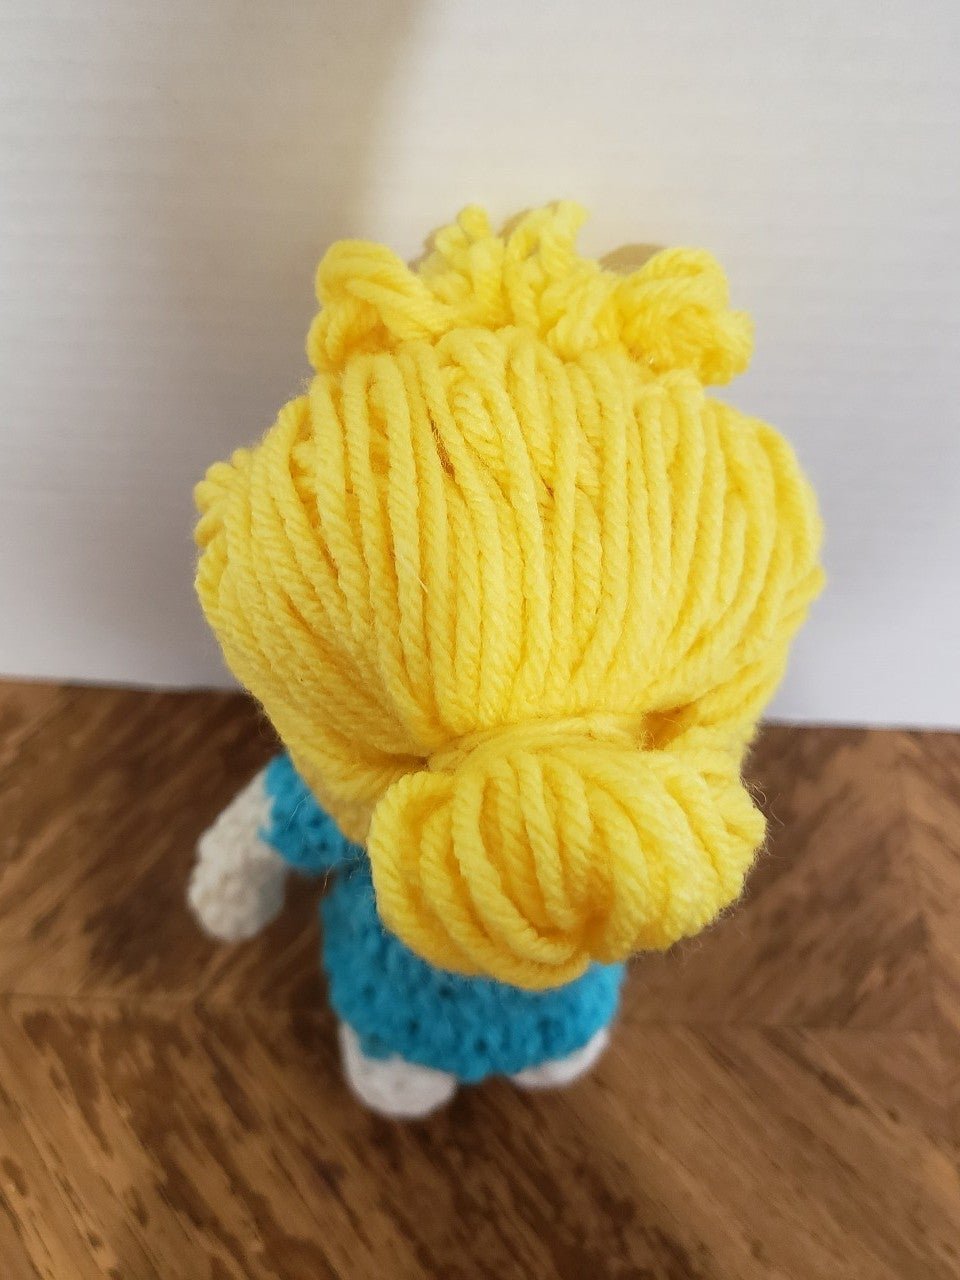 Handmade Crochet Sally Brown Amigurumi Doll AOTQtzcp8